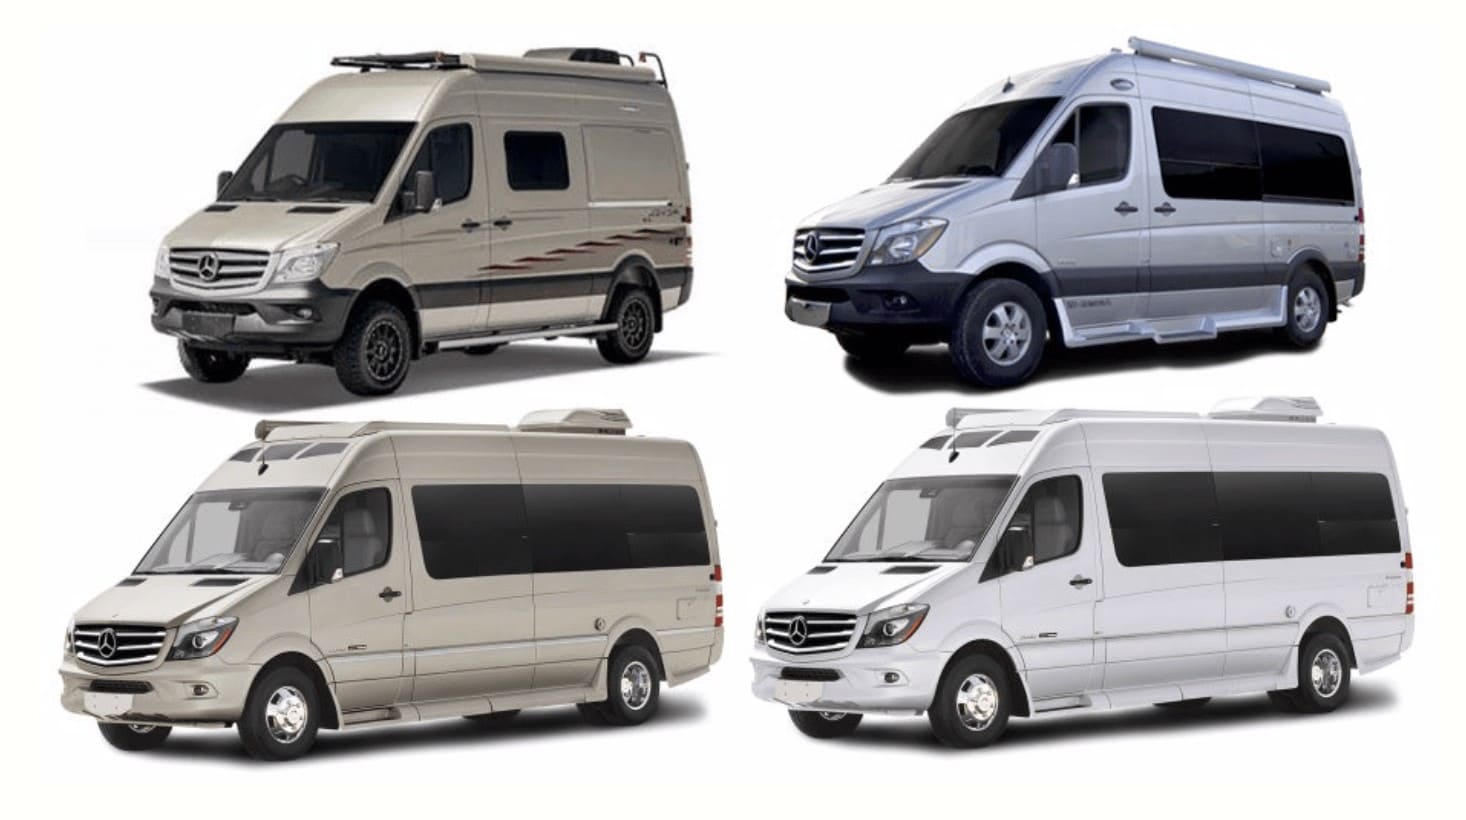 Four luxury Sprinter camper vans available for rent by Mercedes Sprinter RV Rental